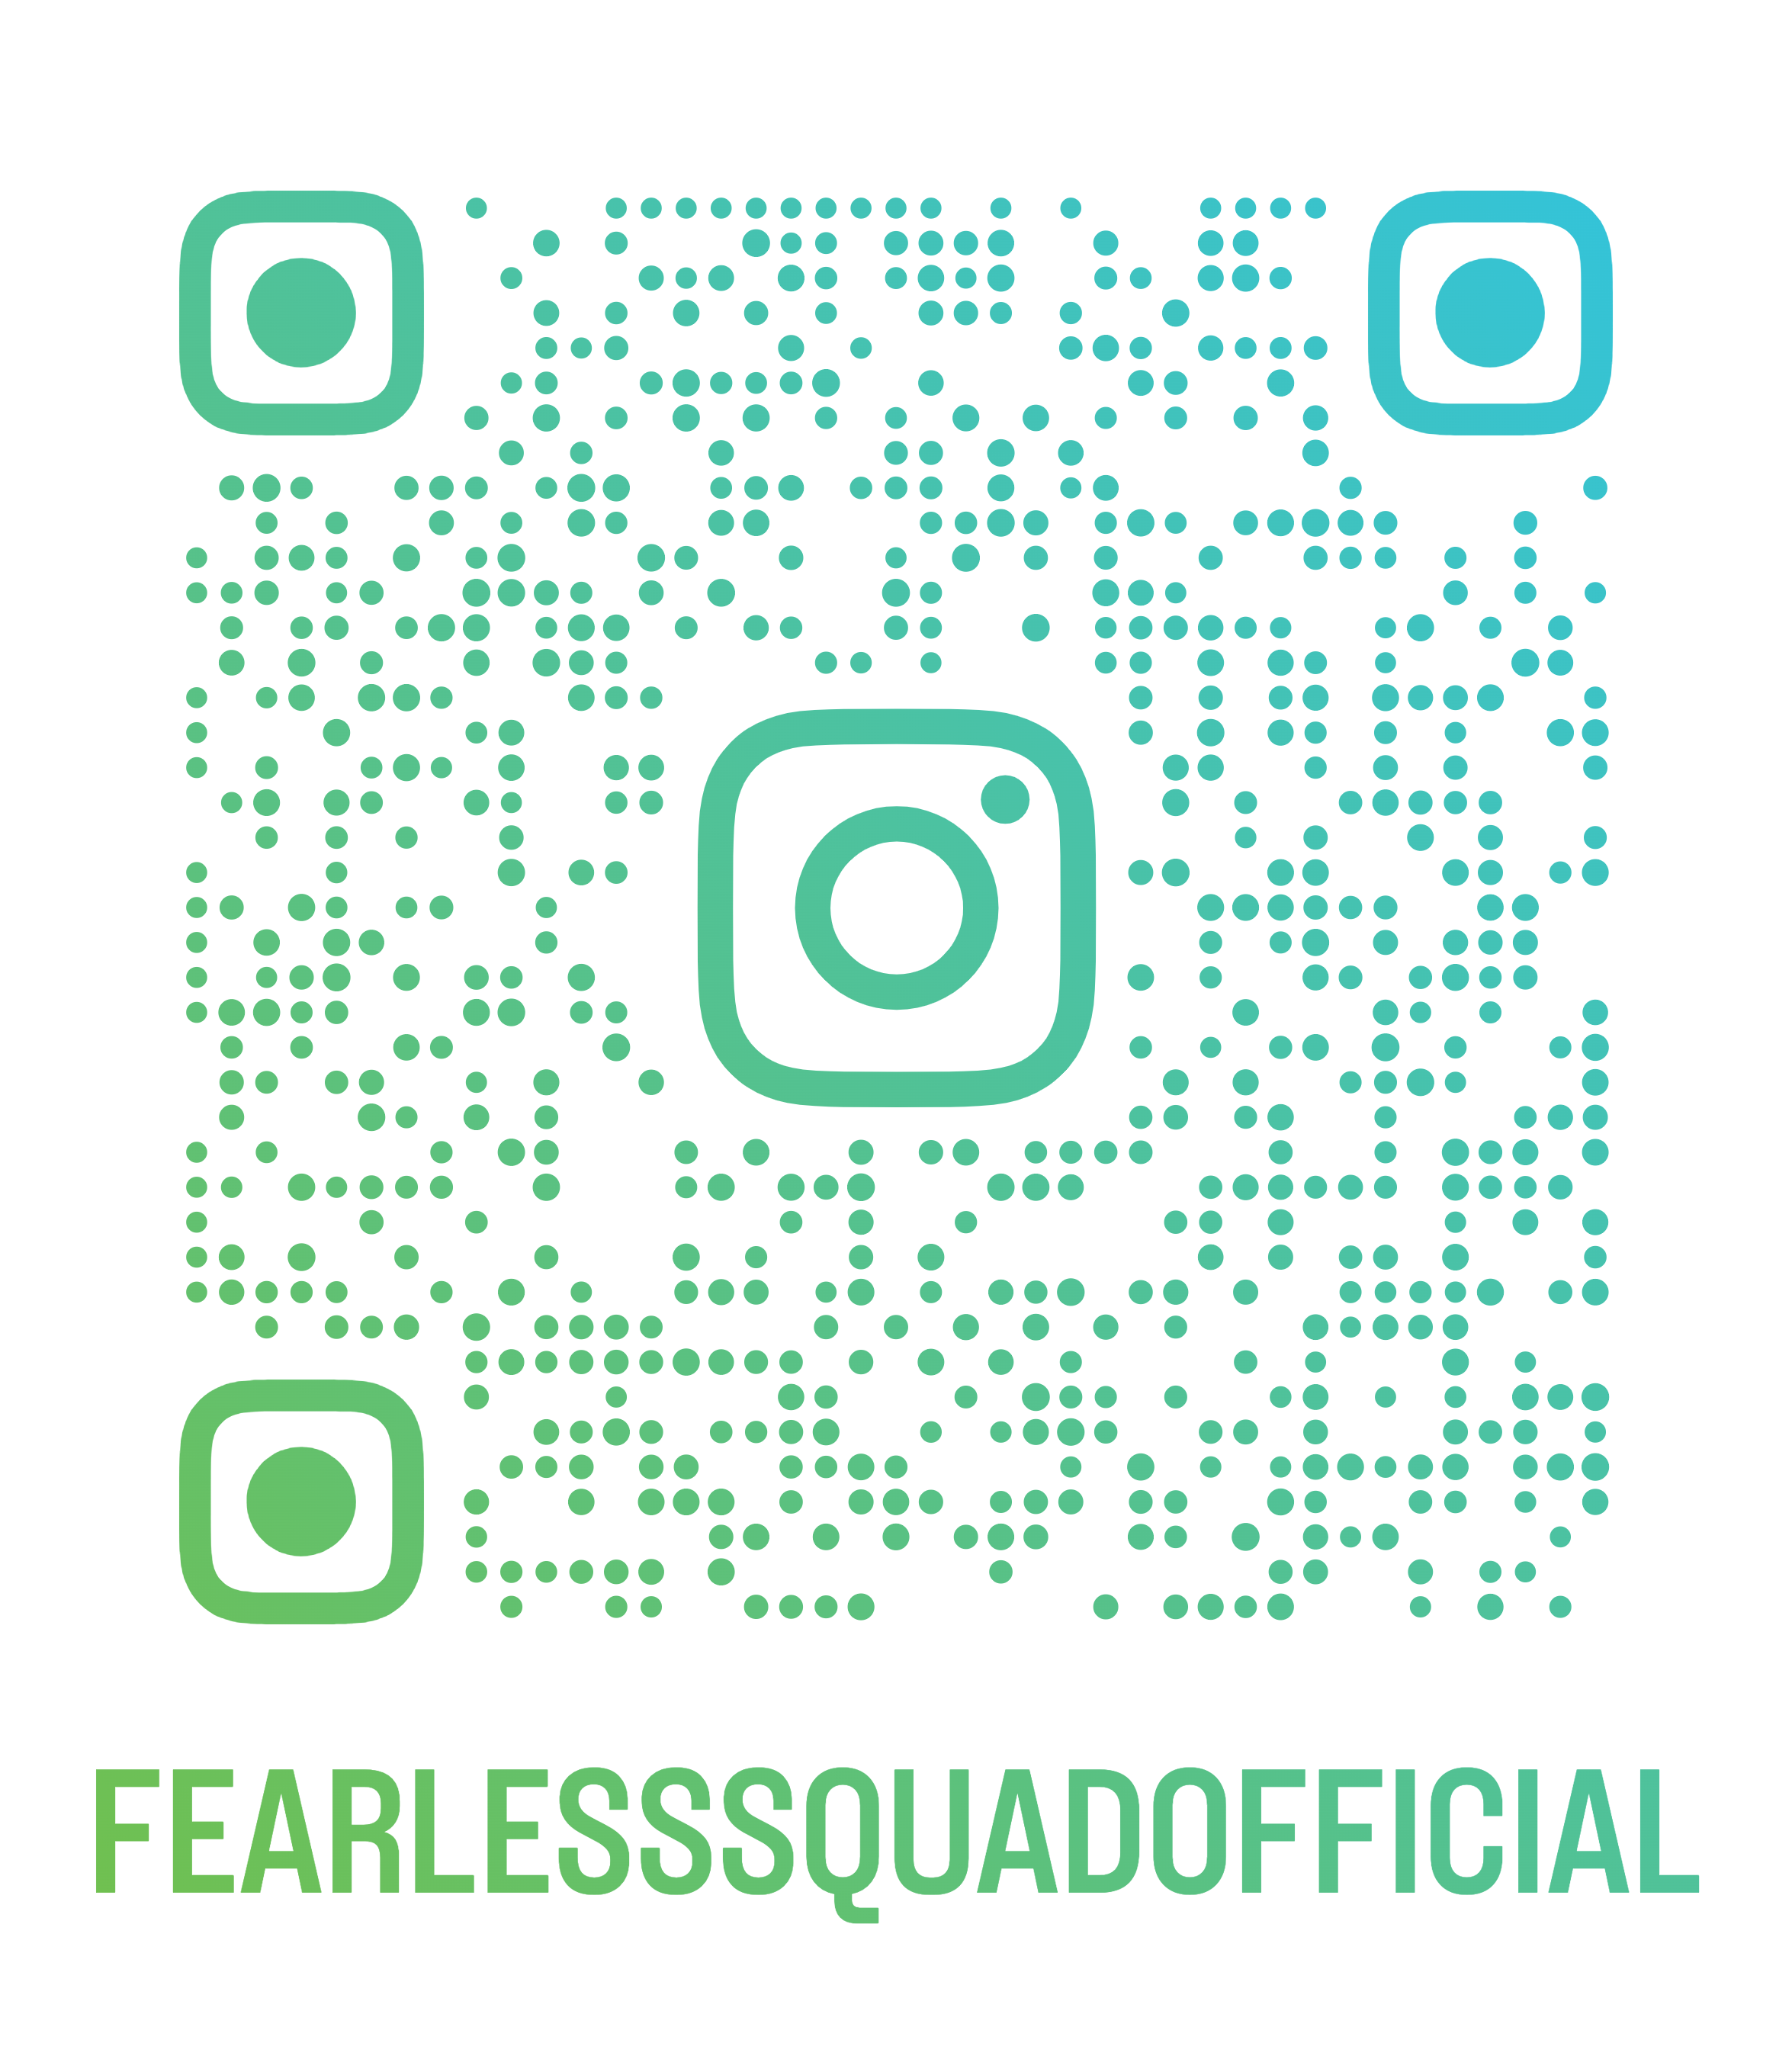 @fearlesssquadofficial on Instagram